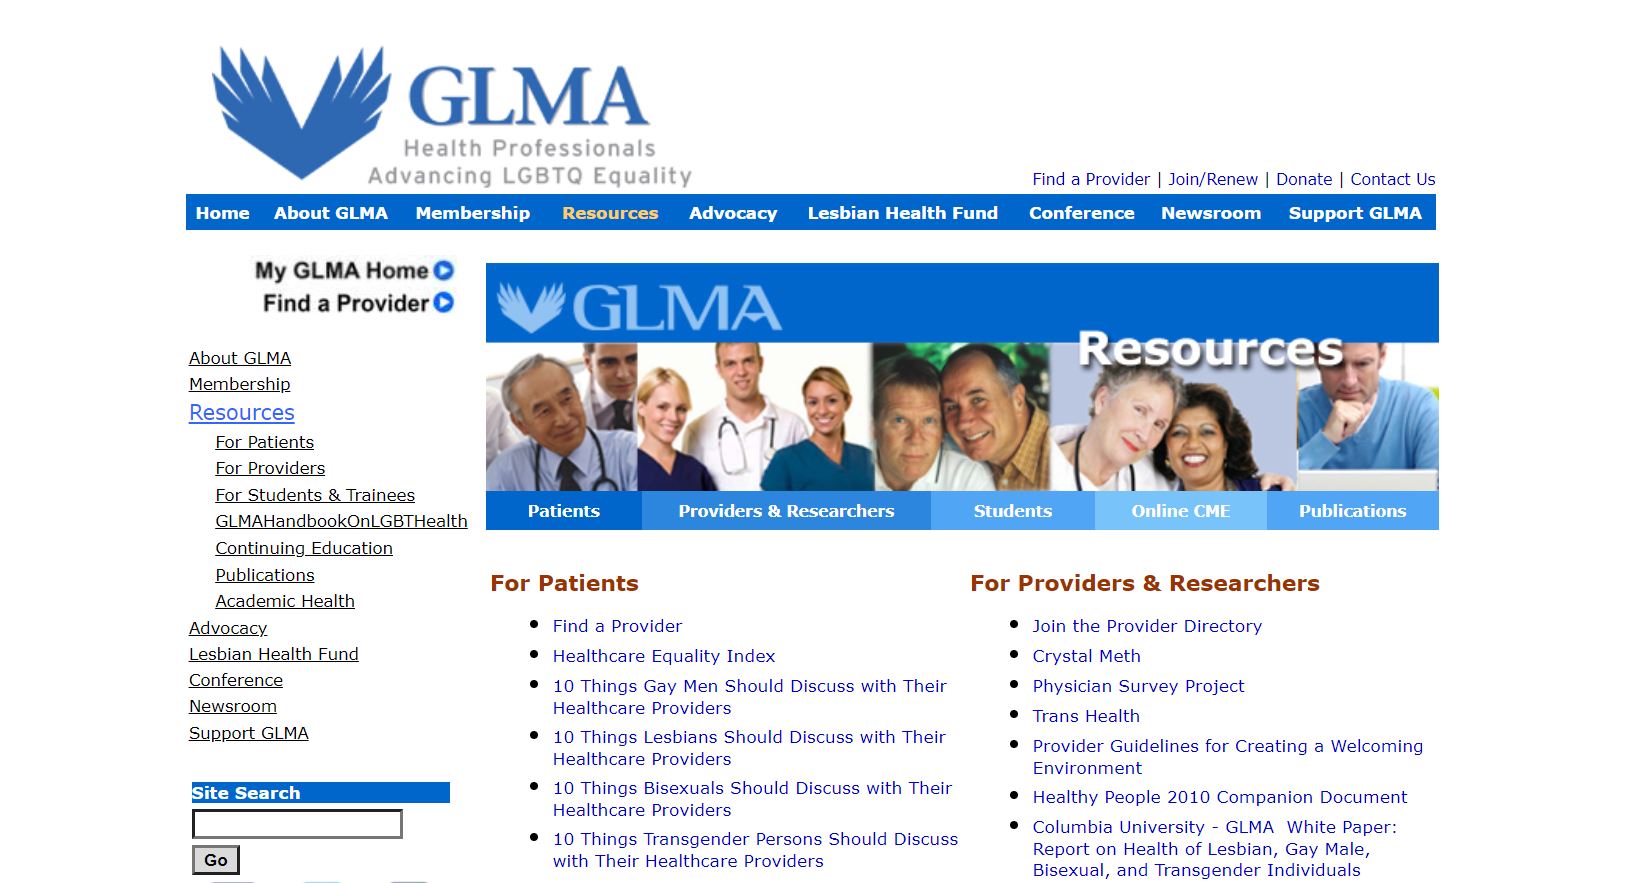 GLMA Health Professionals Advancing LGBTQ Equality